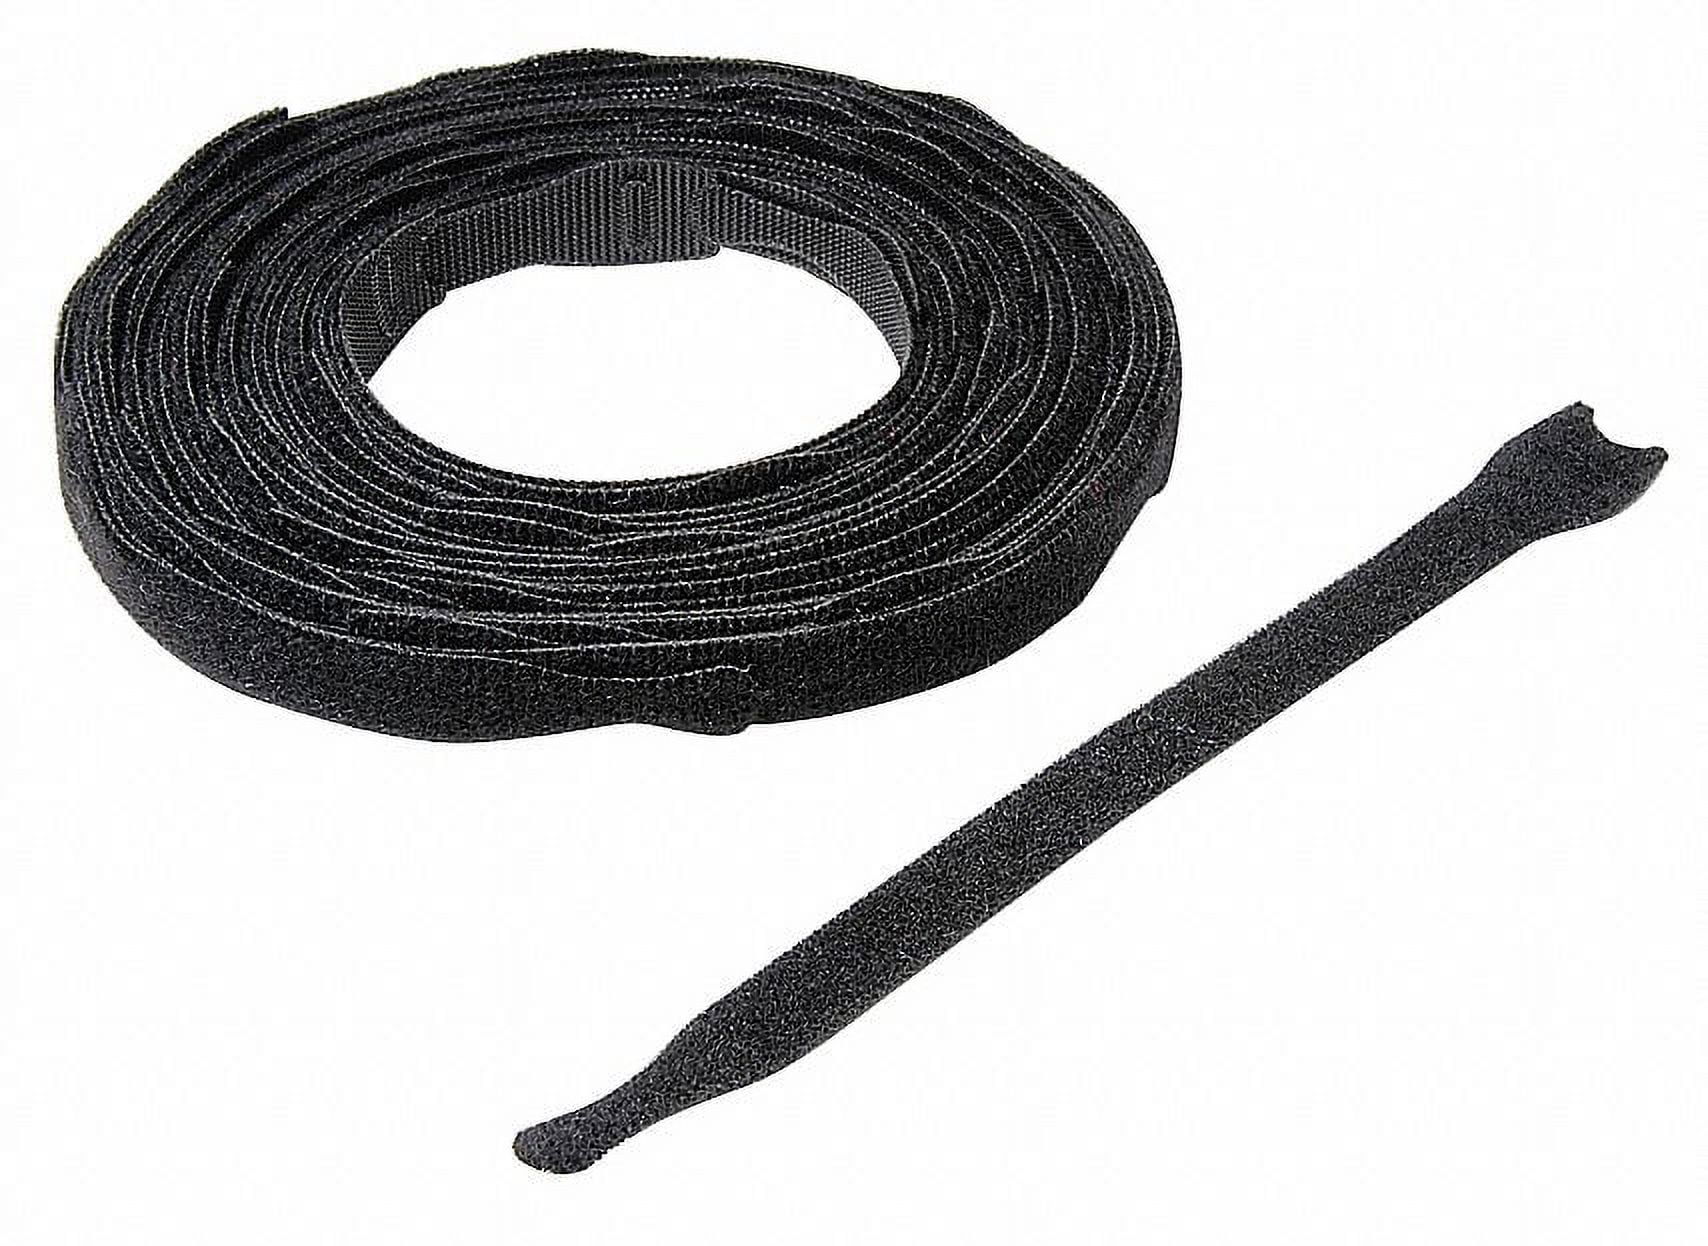 Velcro Brand - 1 inch White Loop 3610 Sew-On